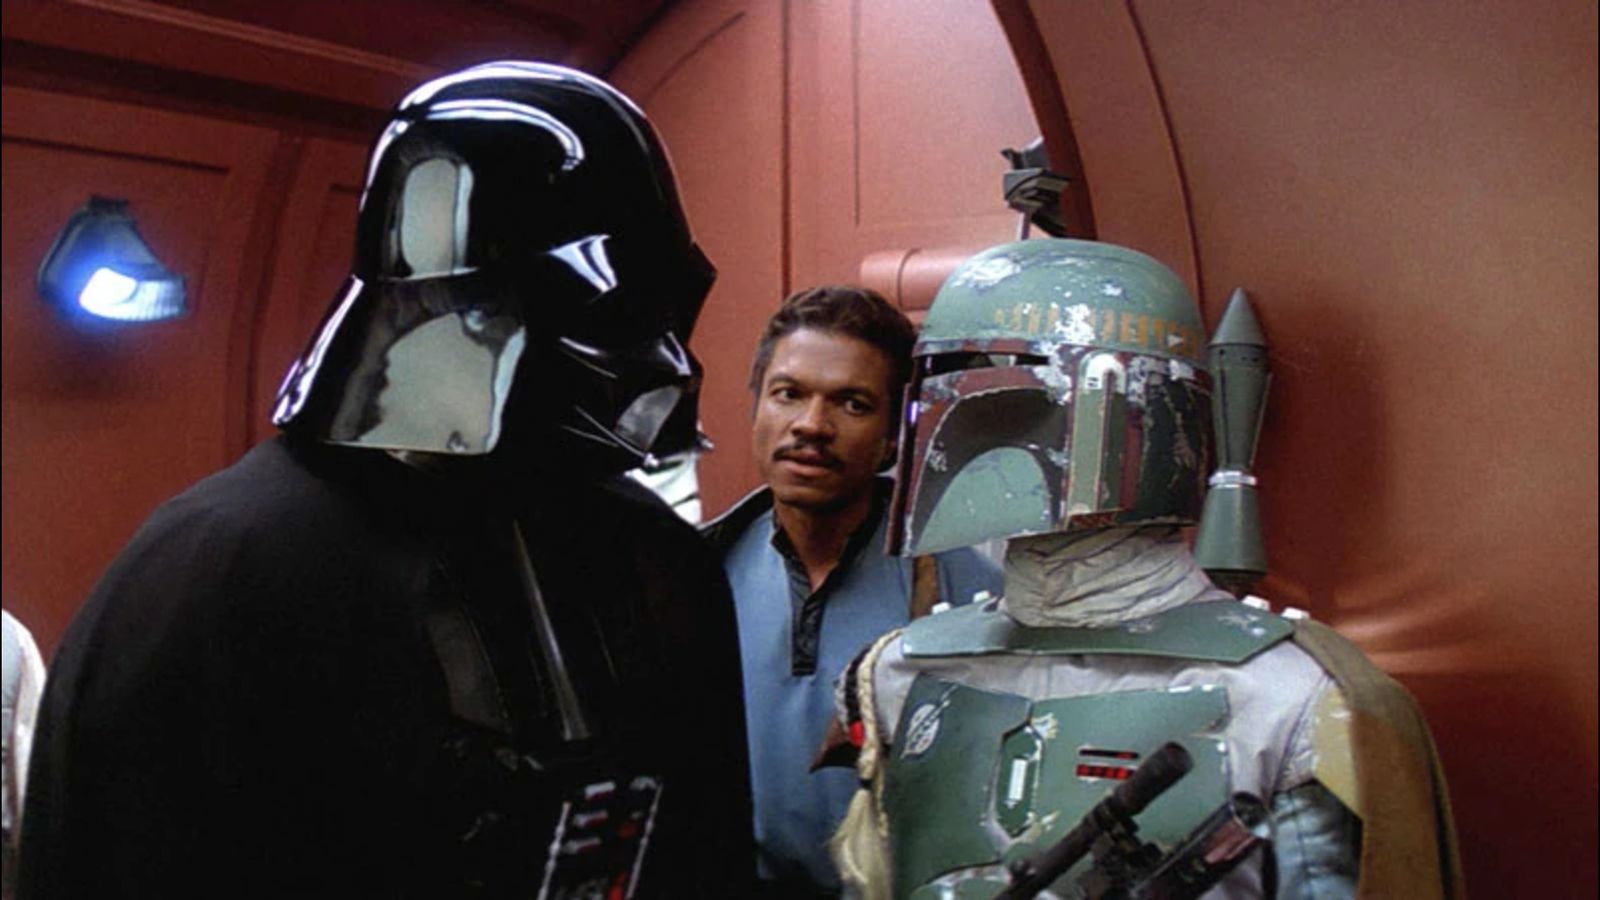 Boba Fett with Lando and Darth Vader